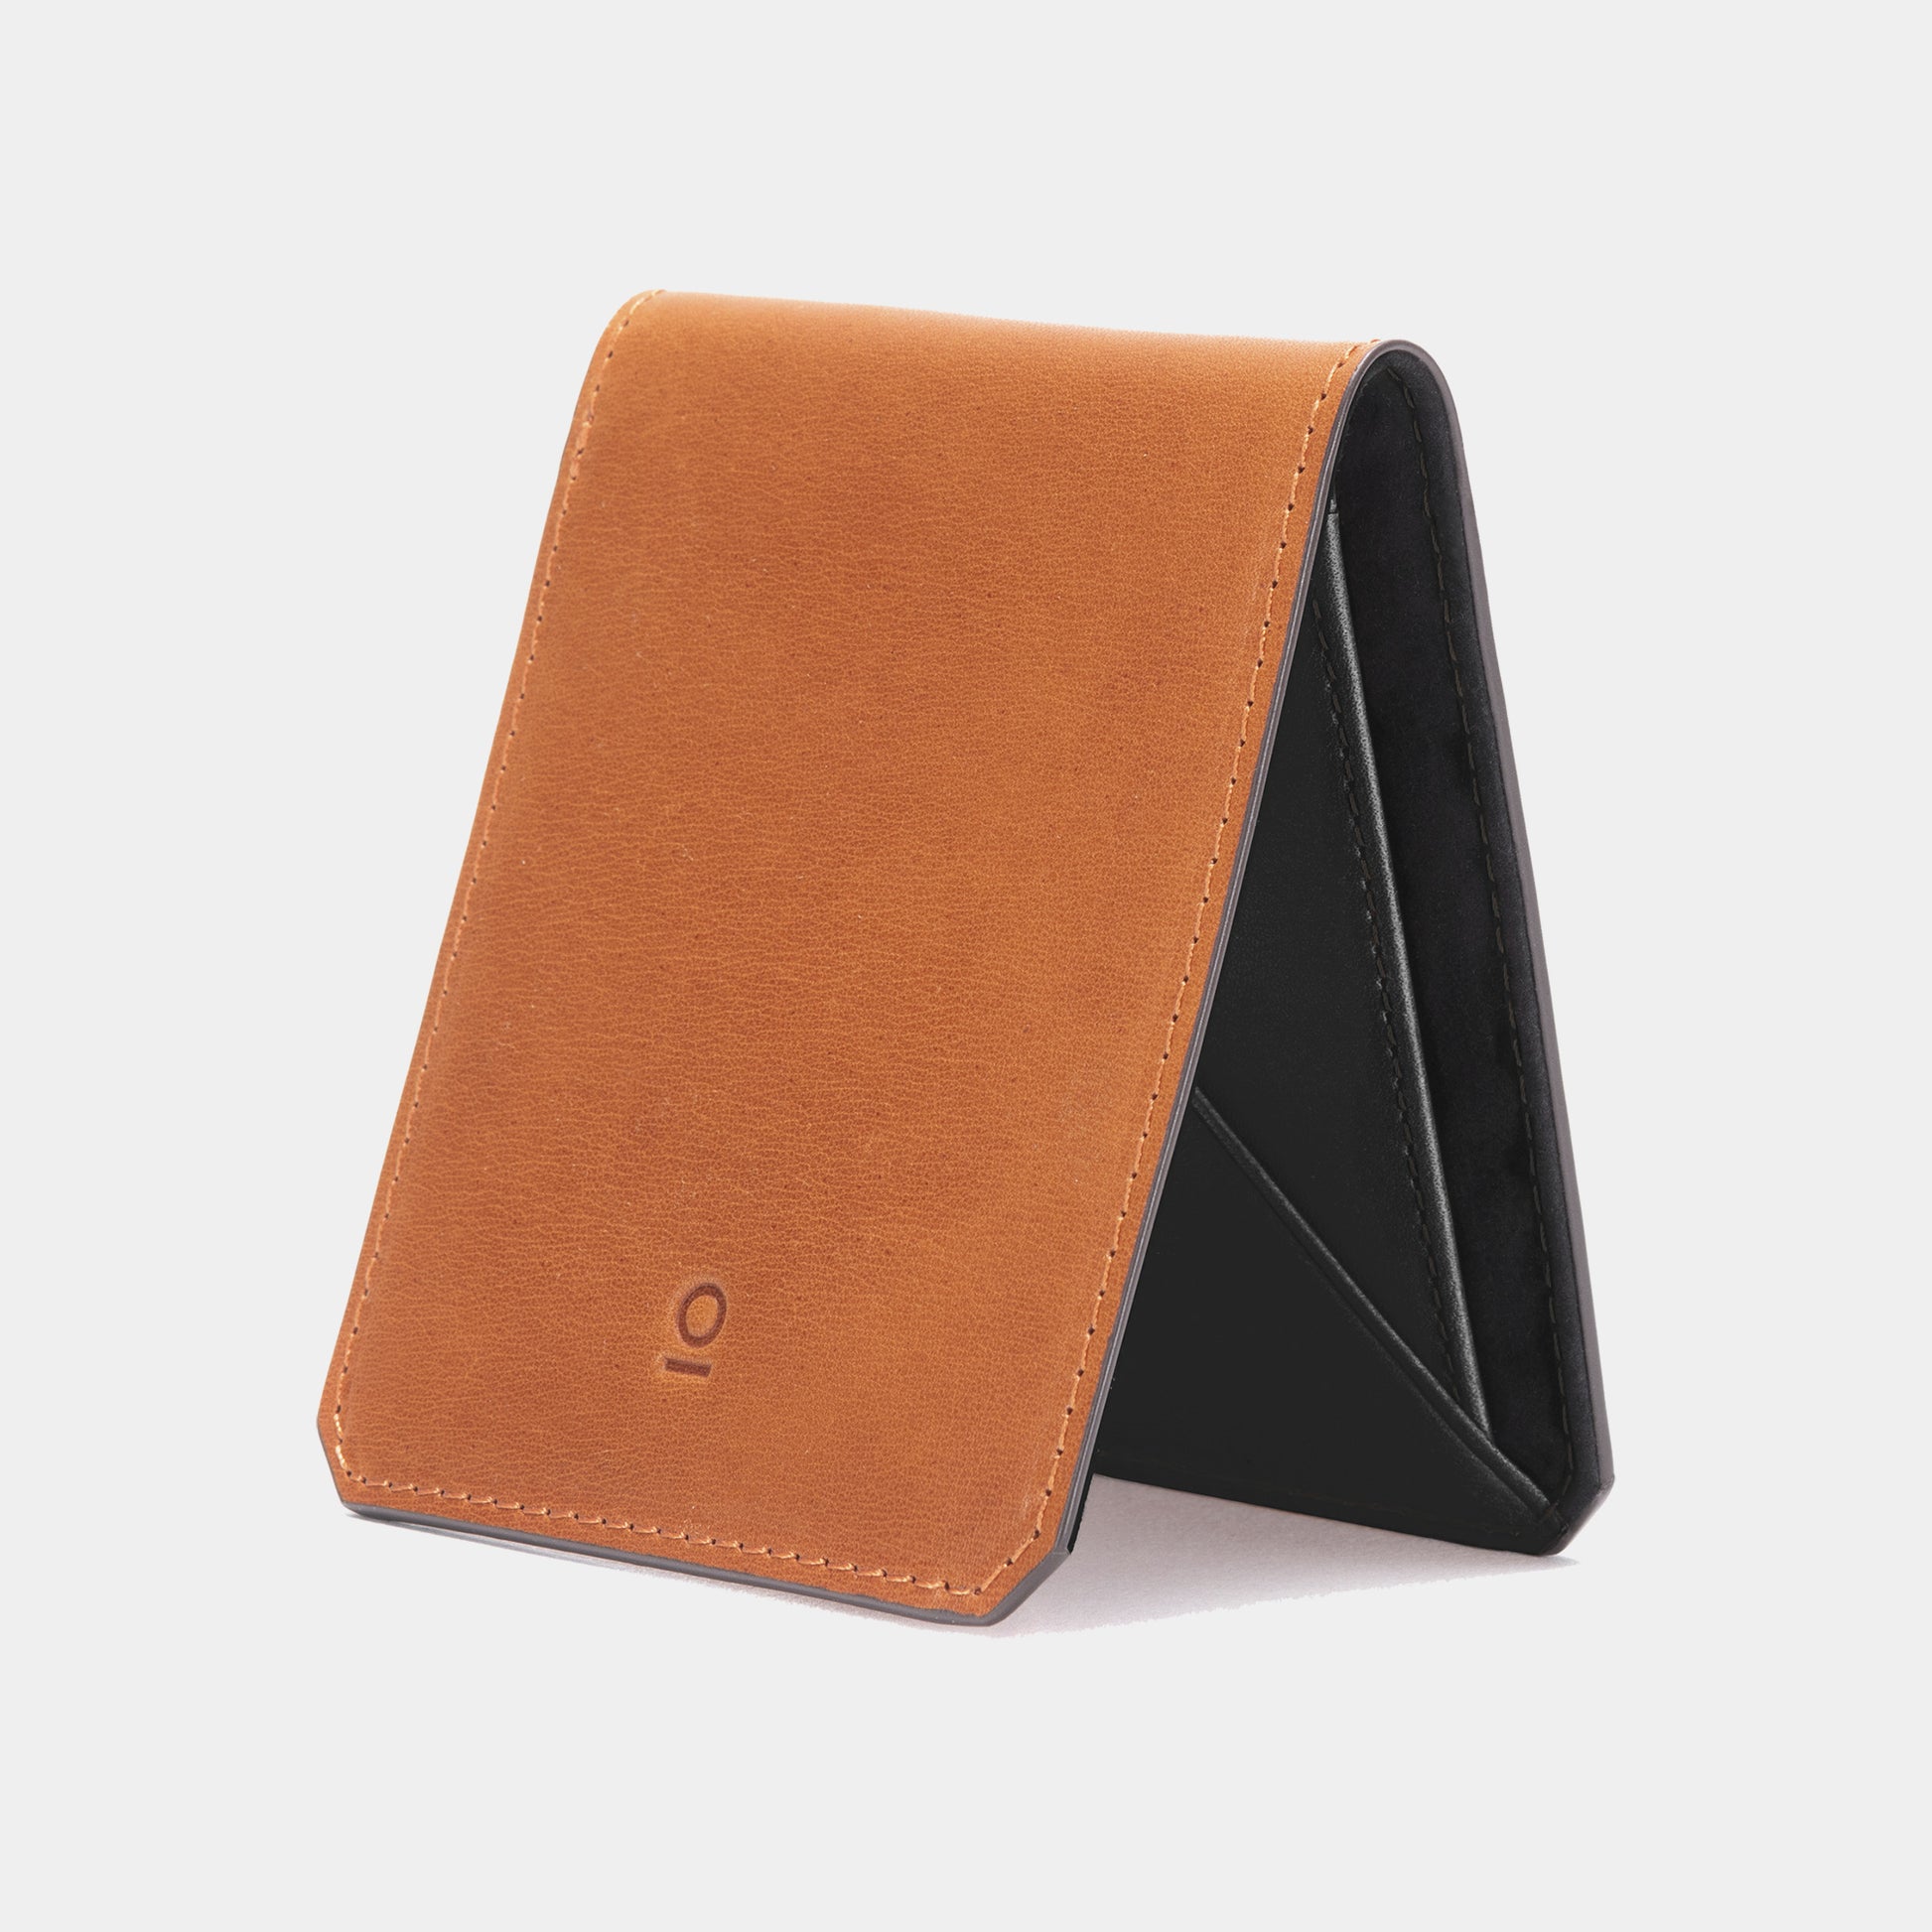 Cognac Brown Leather RFID Card Holder - 4 Card Slots - Note